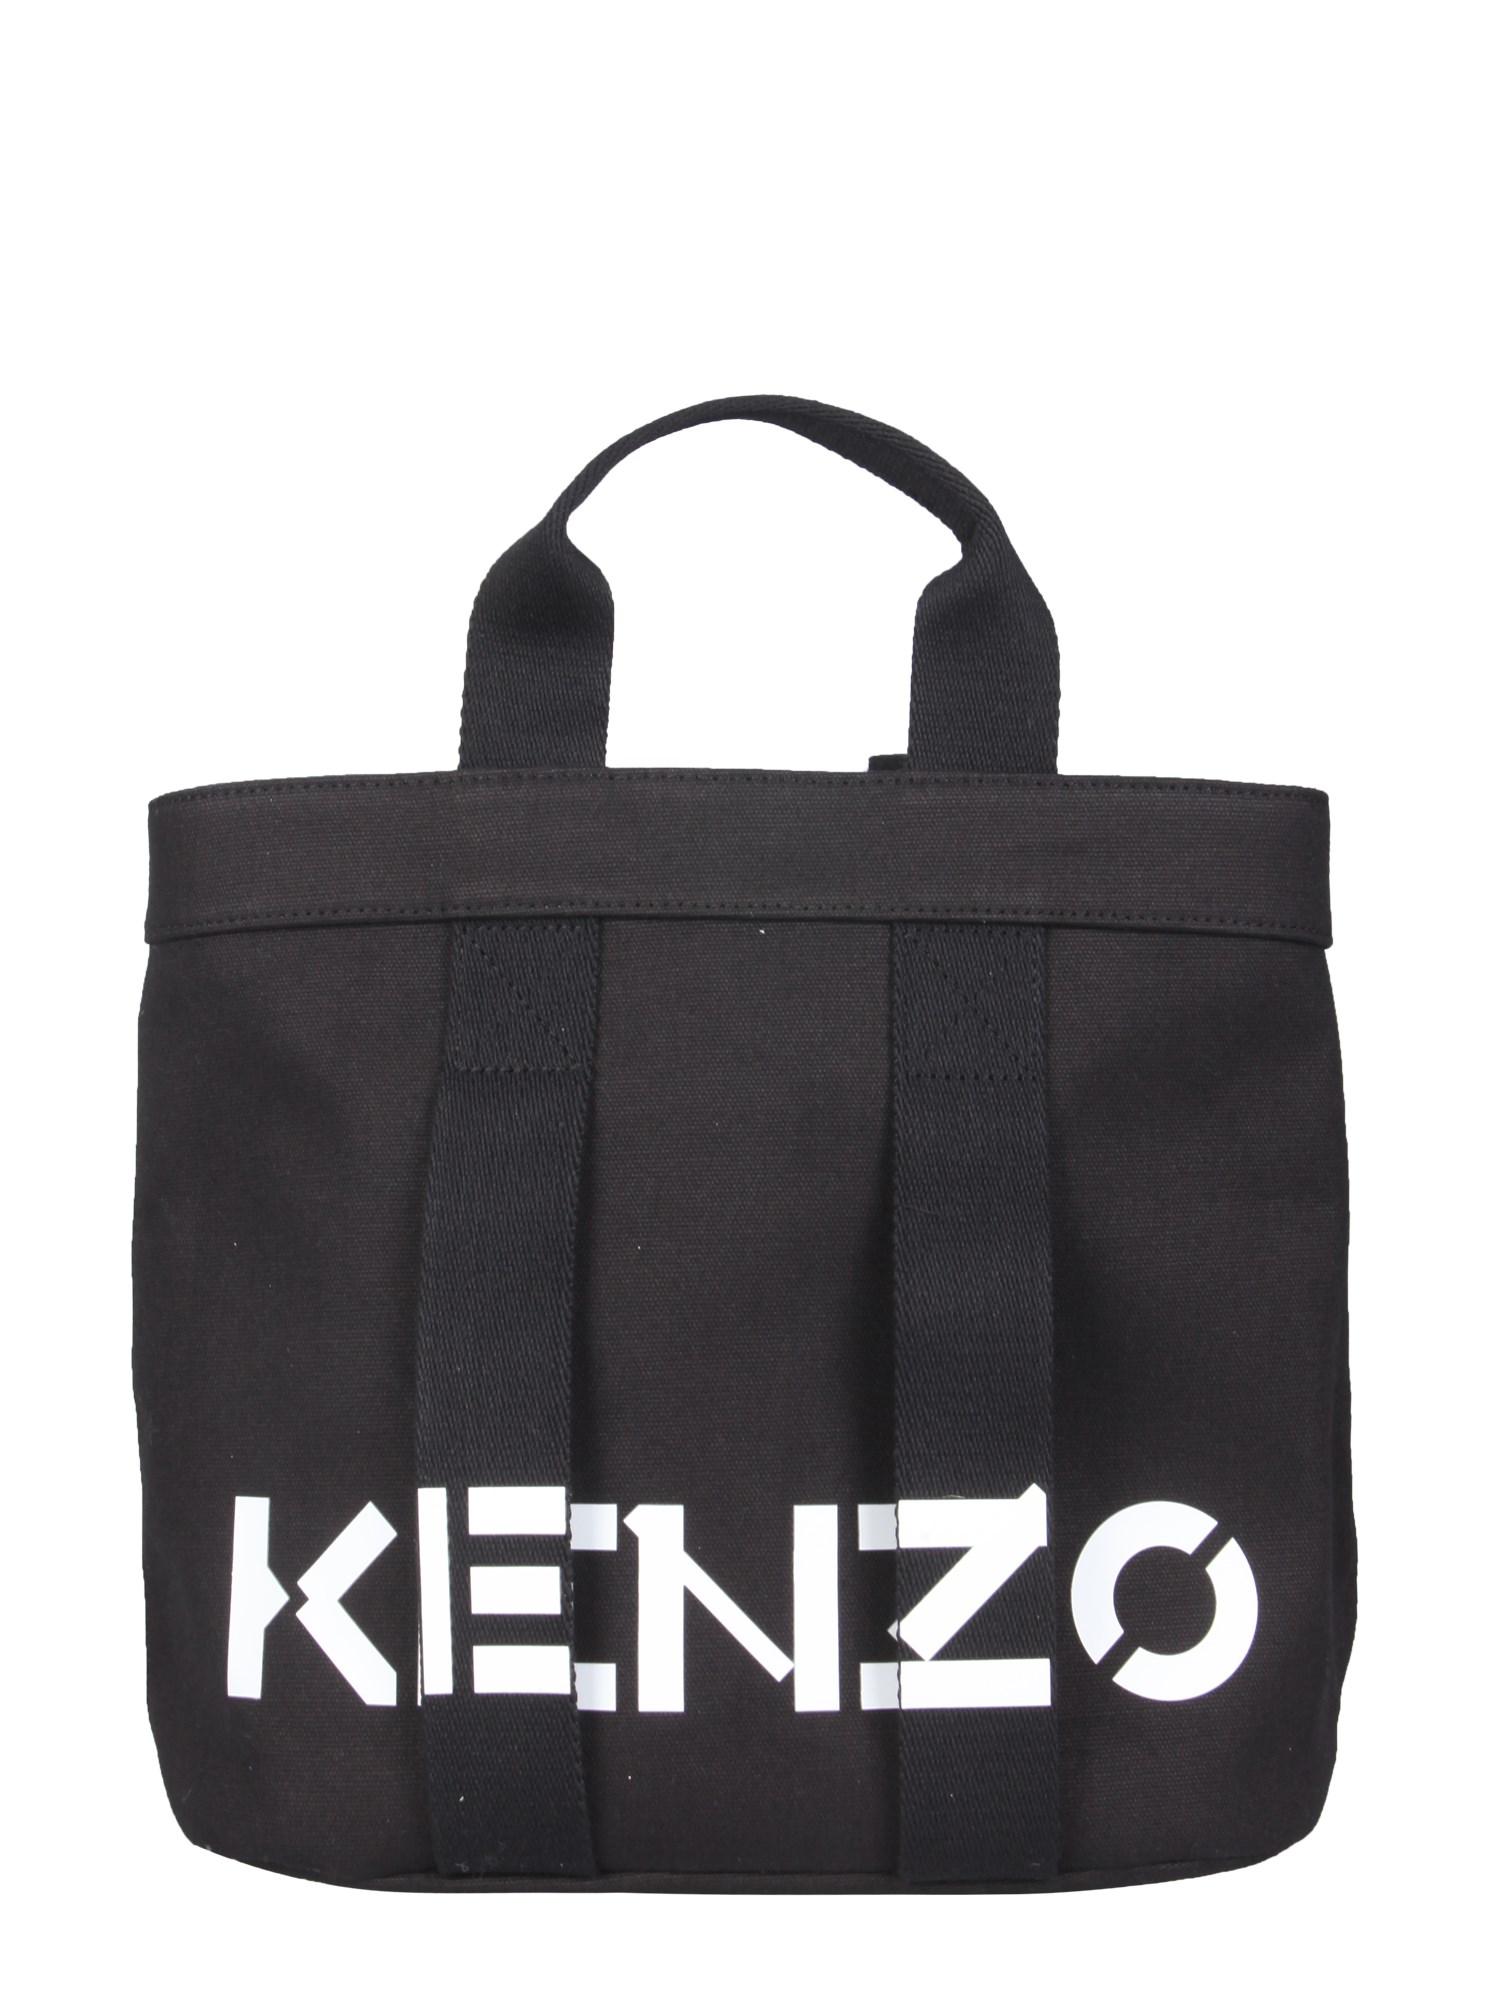 kenzo small tote bag